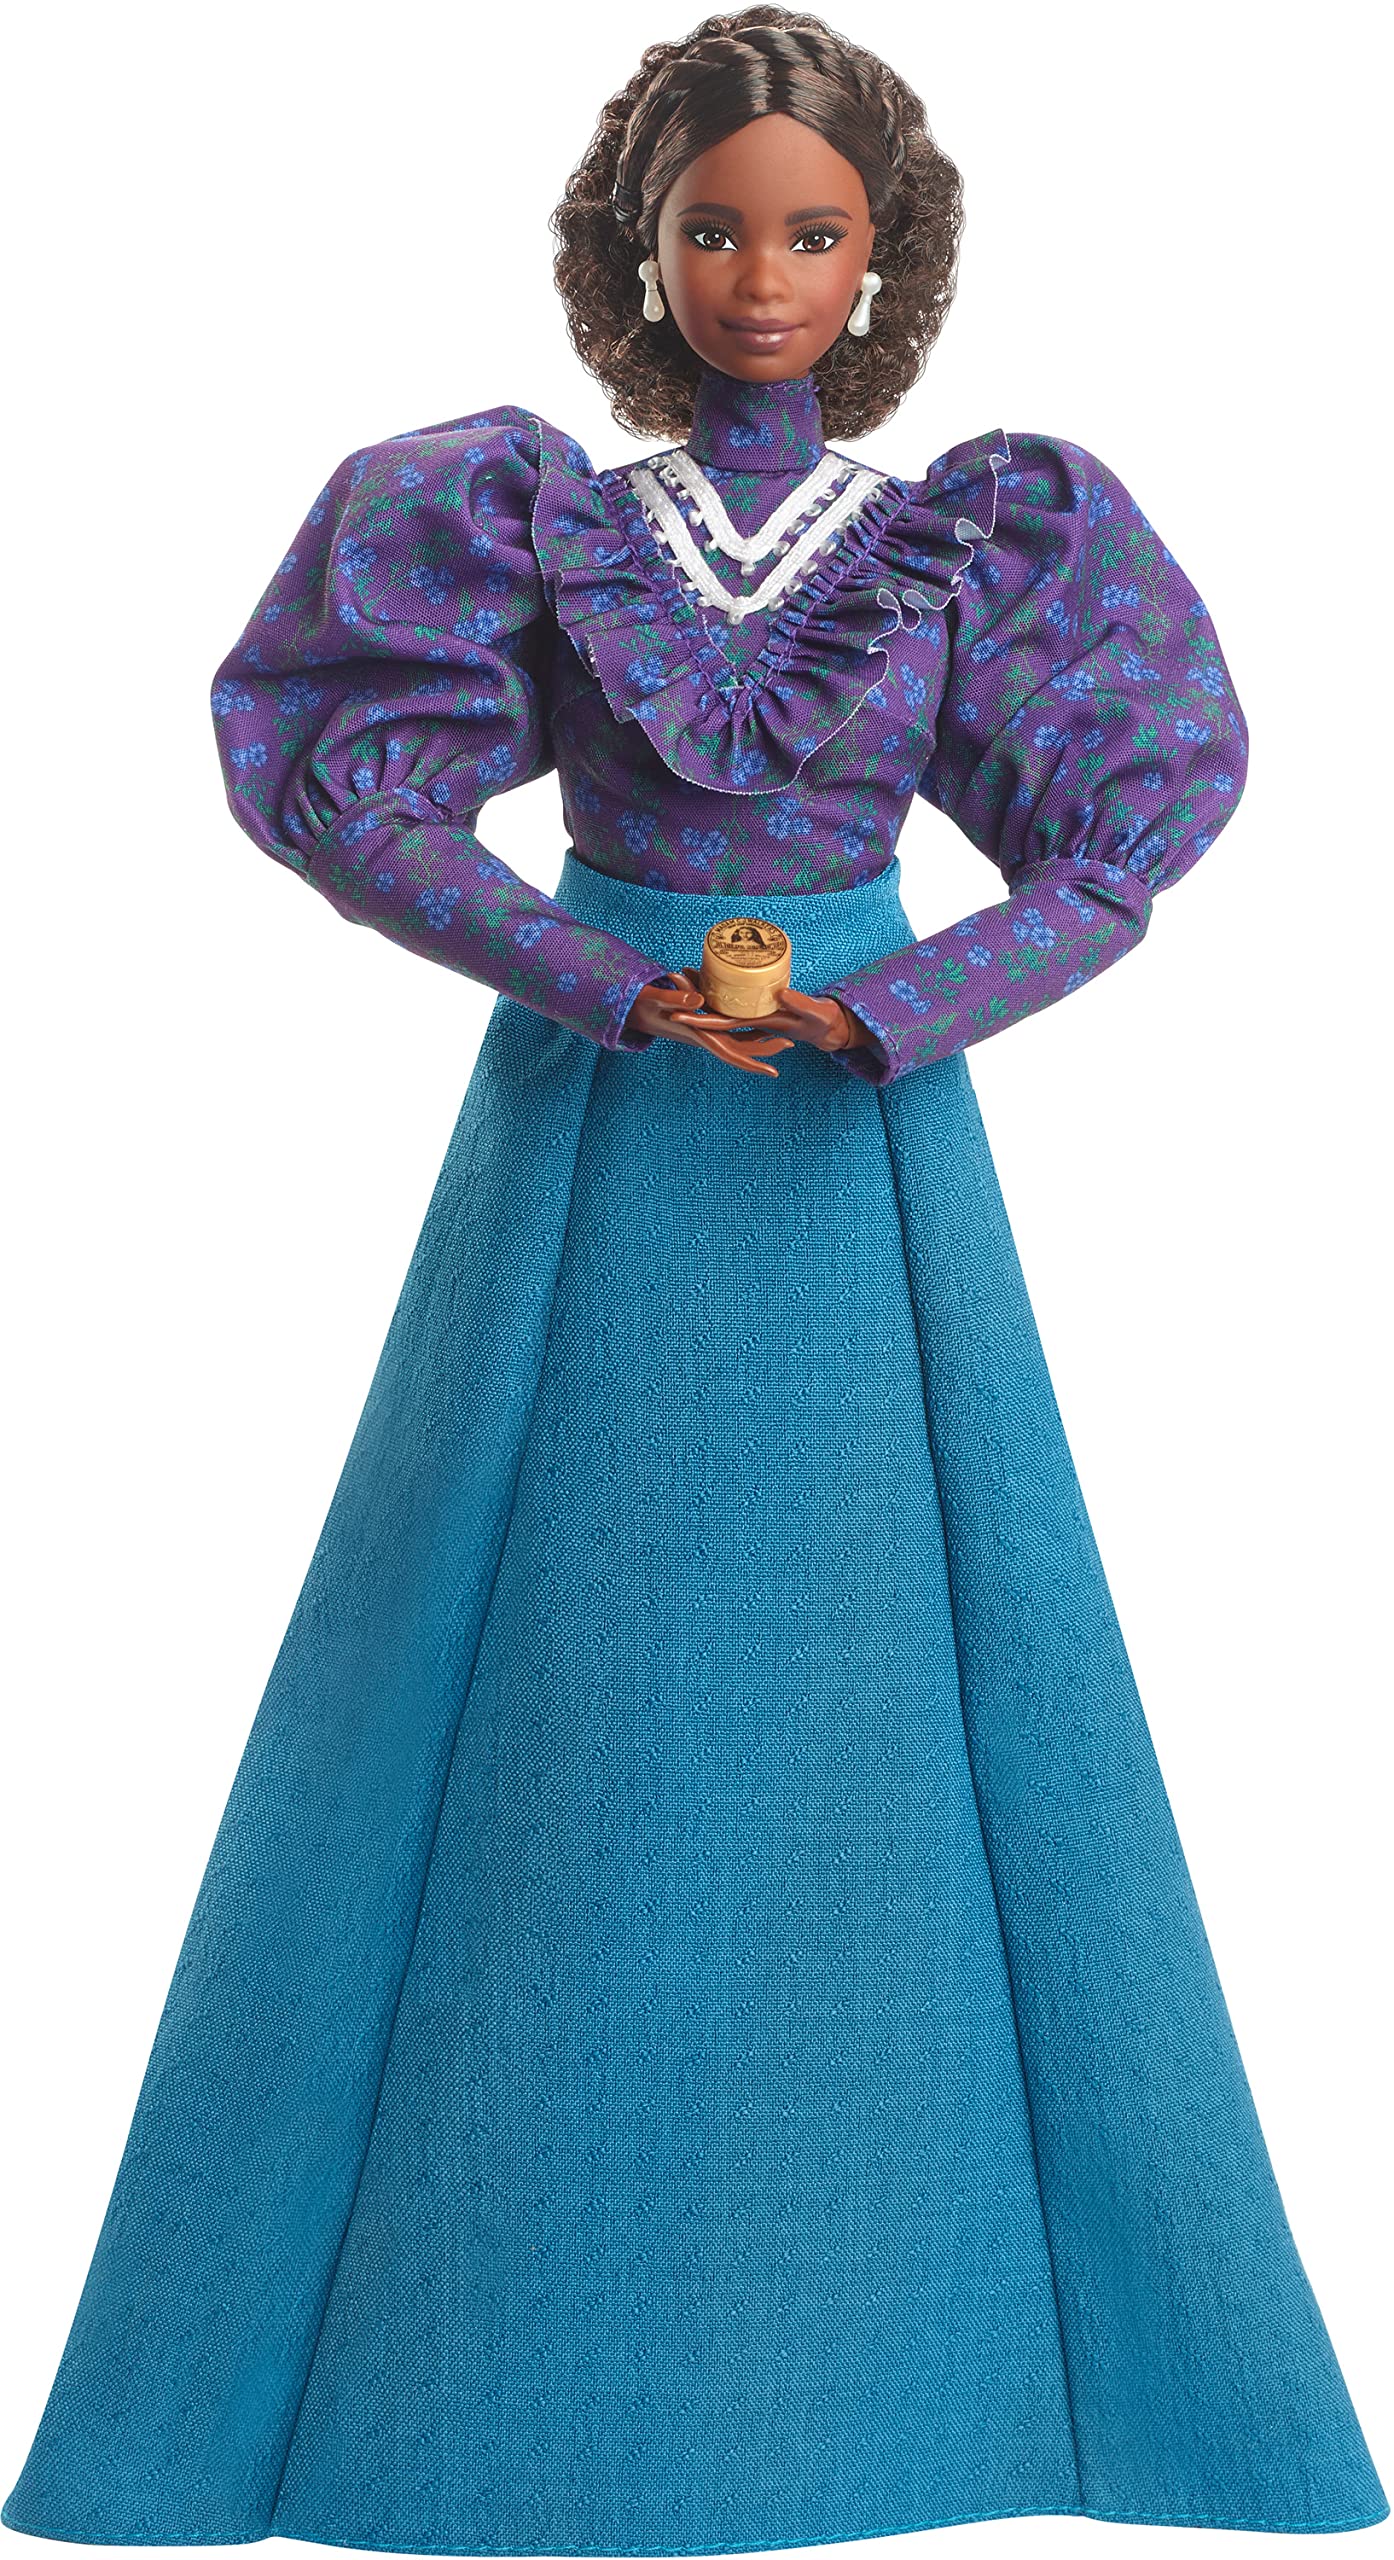 Barbie Signature Madam C.J. Walker Inspiring Women Doll with Accessories & Doll Stand